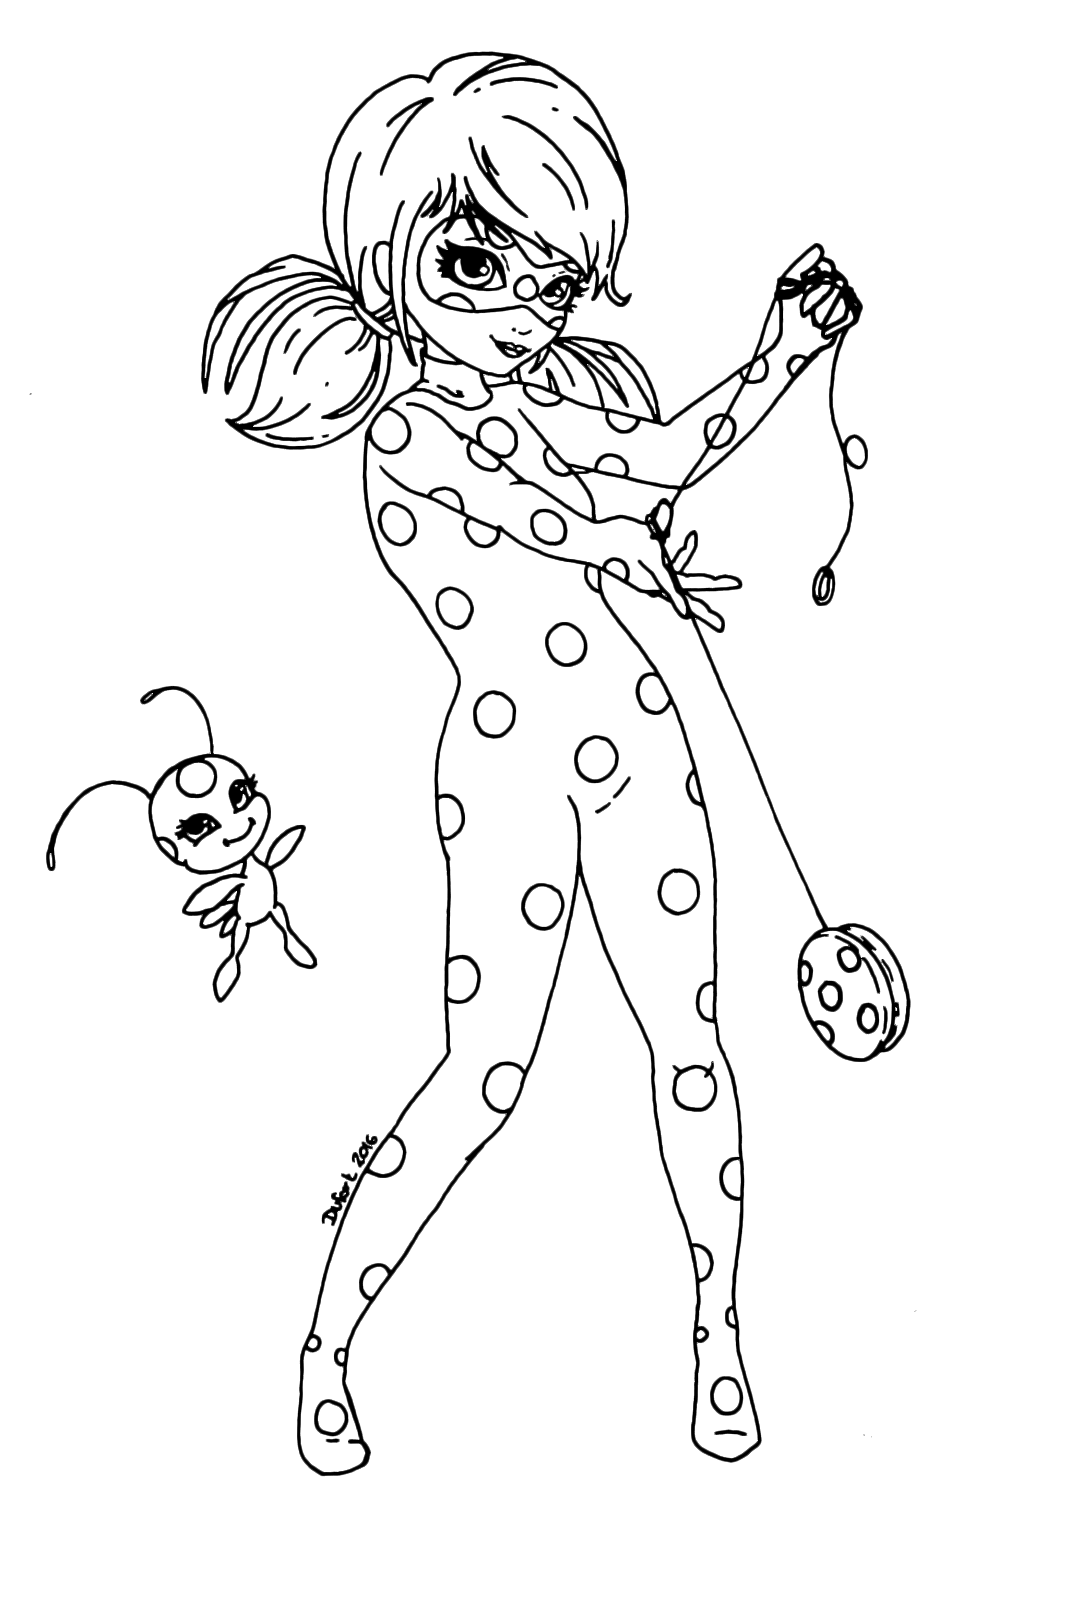 Miraculous: Tales of Ladybug & Cat Noir - With her Kwami Tikki Ladybug uses her magic yo yo